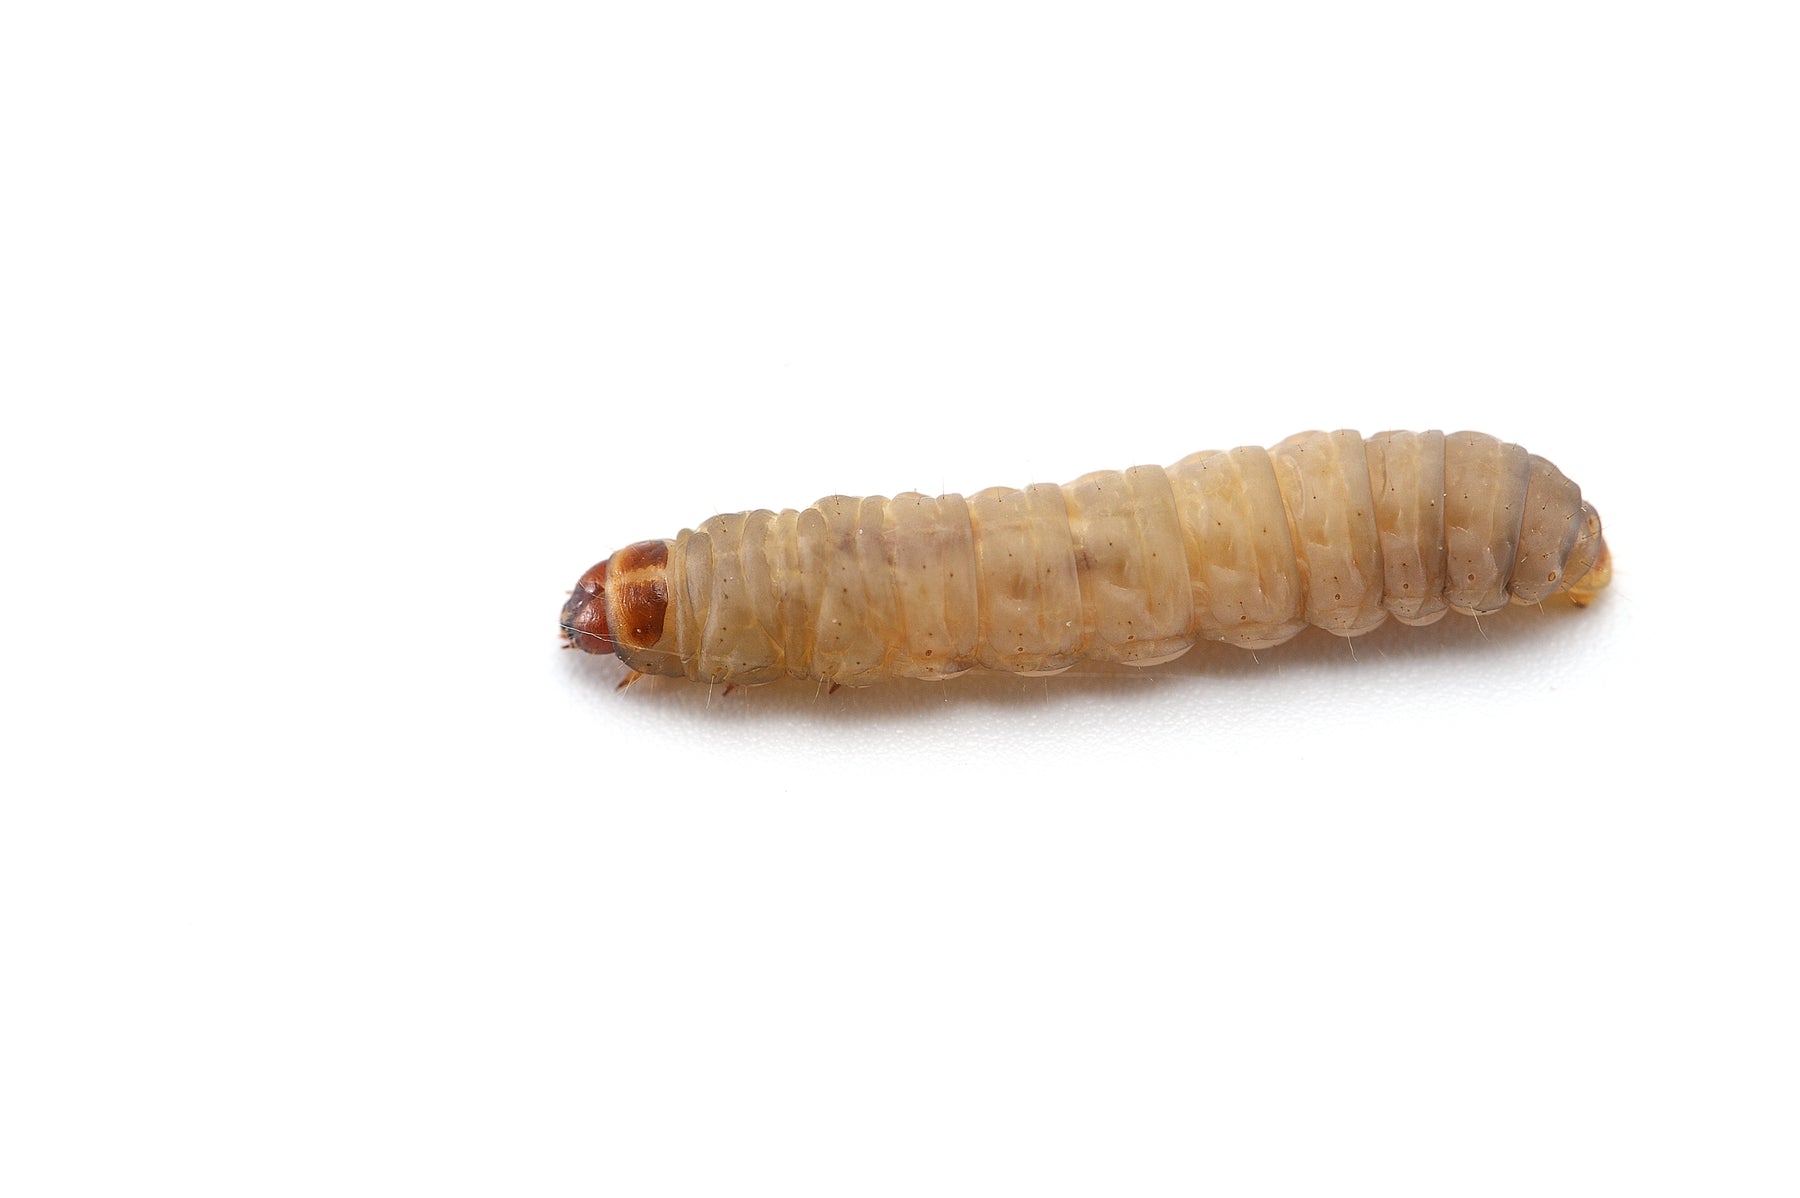 Feeder Waxworms for Sale Online